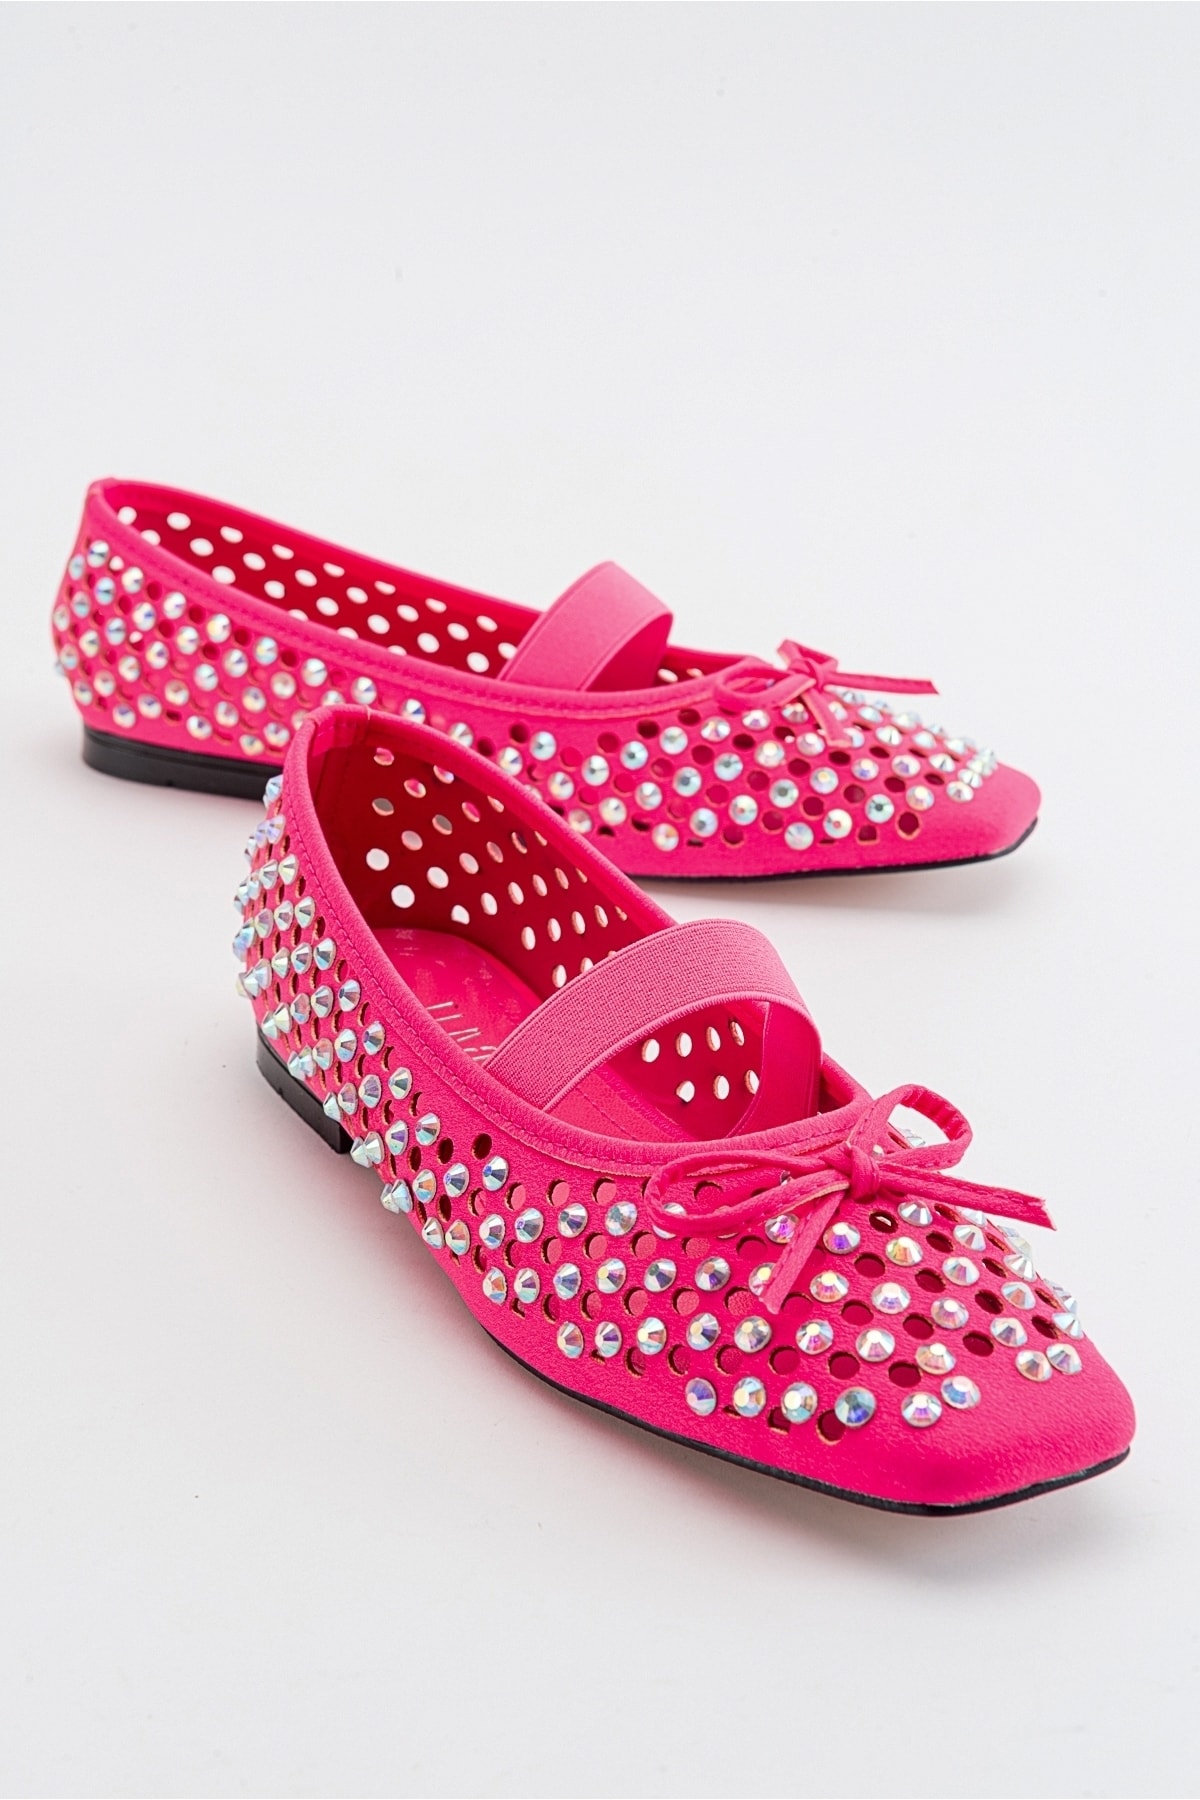 LuviShoes Babes Women's Fuchsia Flat Shoes